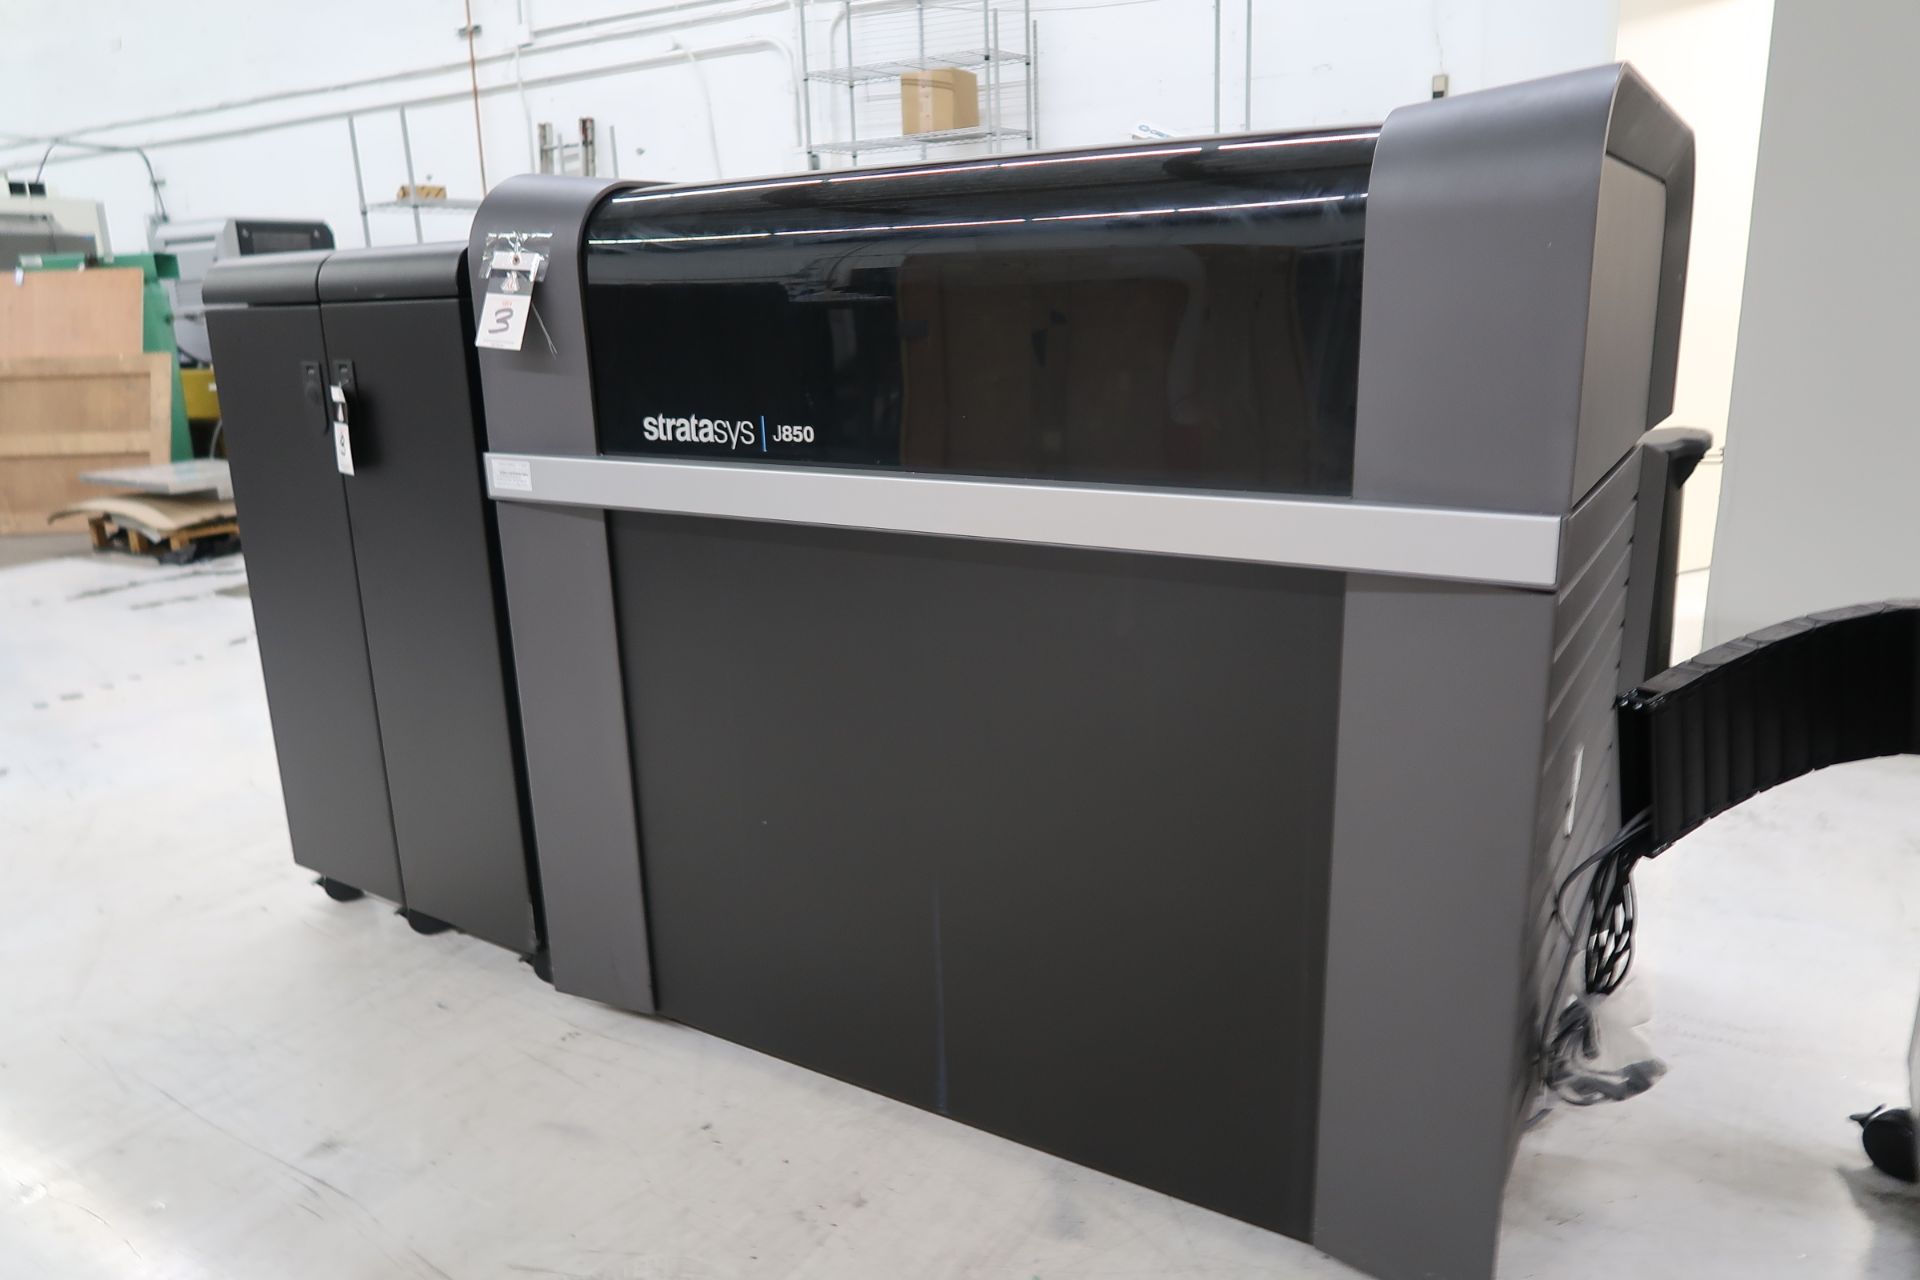 2018 Stratasys J850 Full Color Multi Material Industrial 3D Printer s/n 8500280, SOLD AS IS - Image 2 of 28